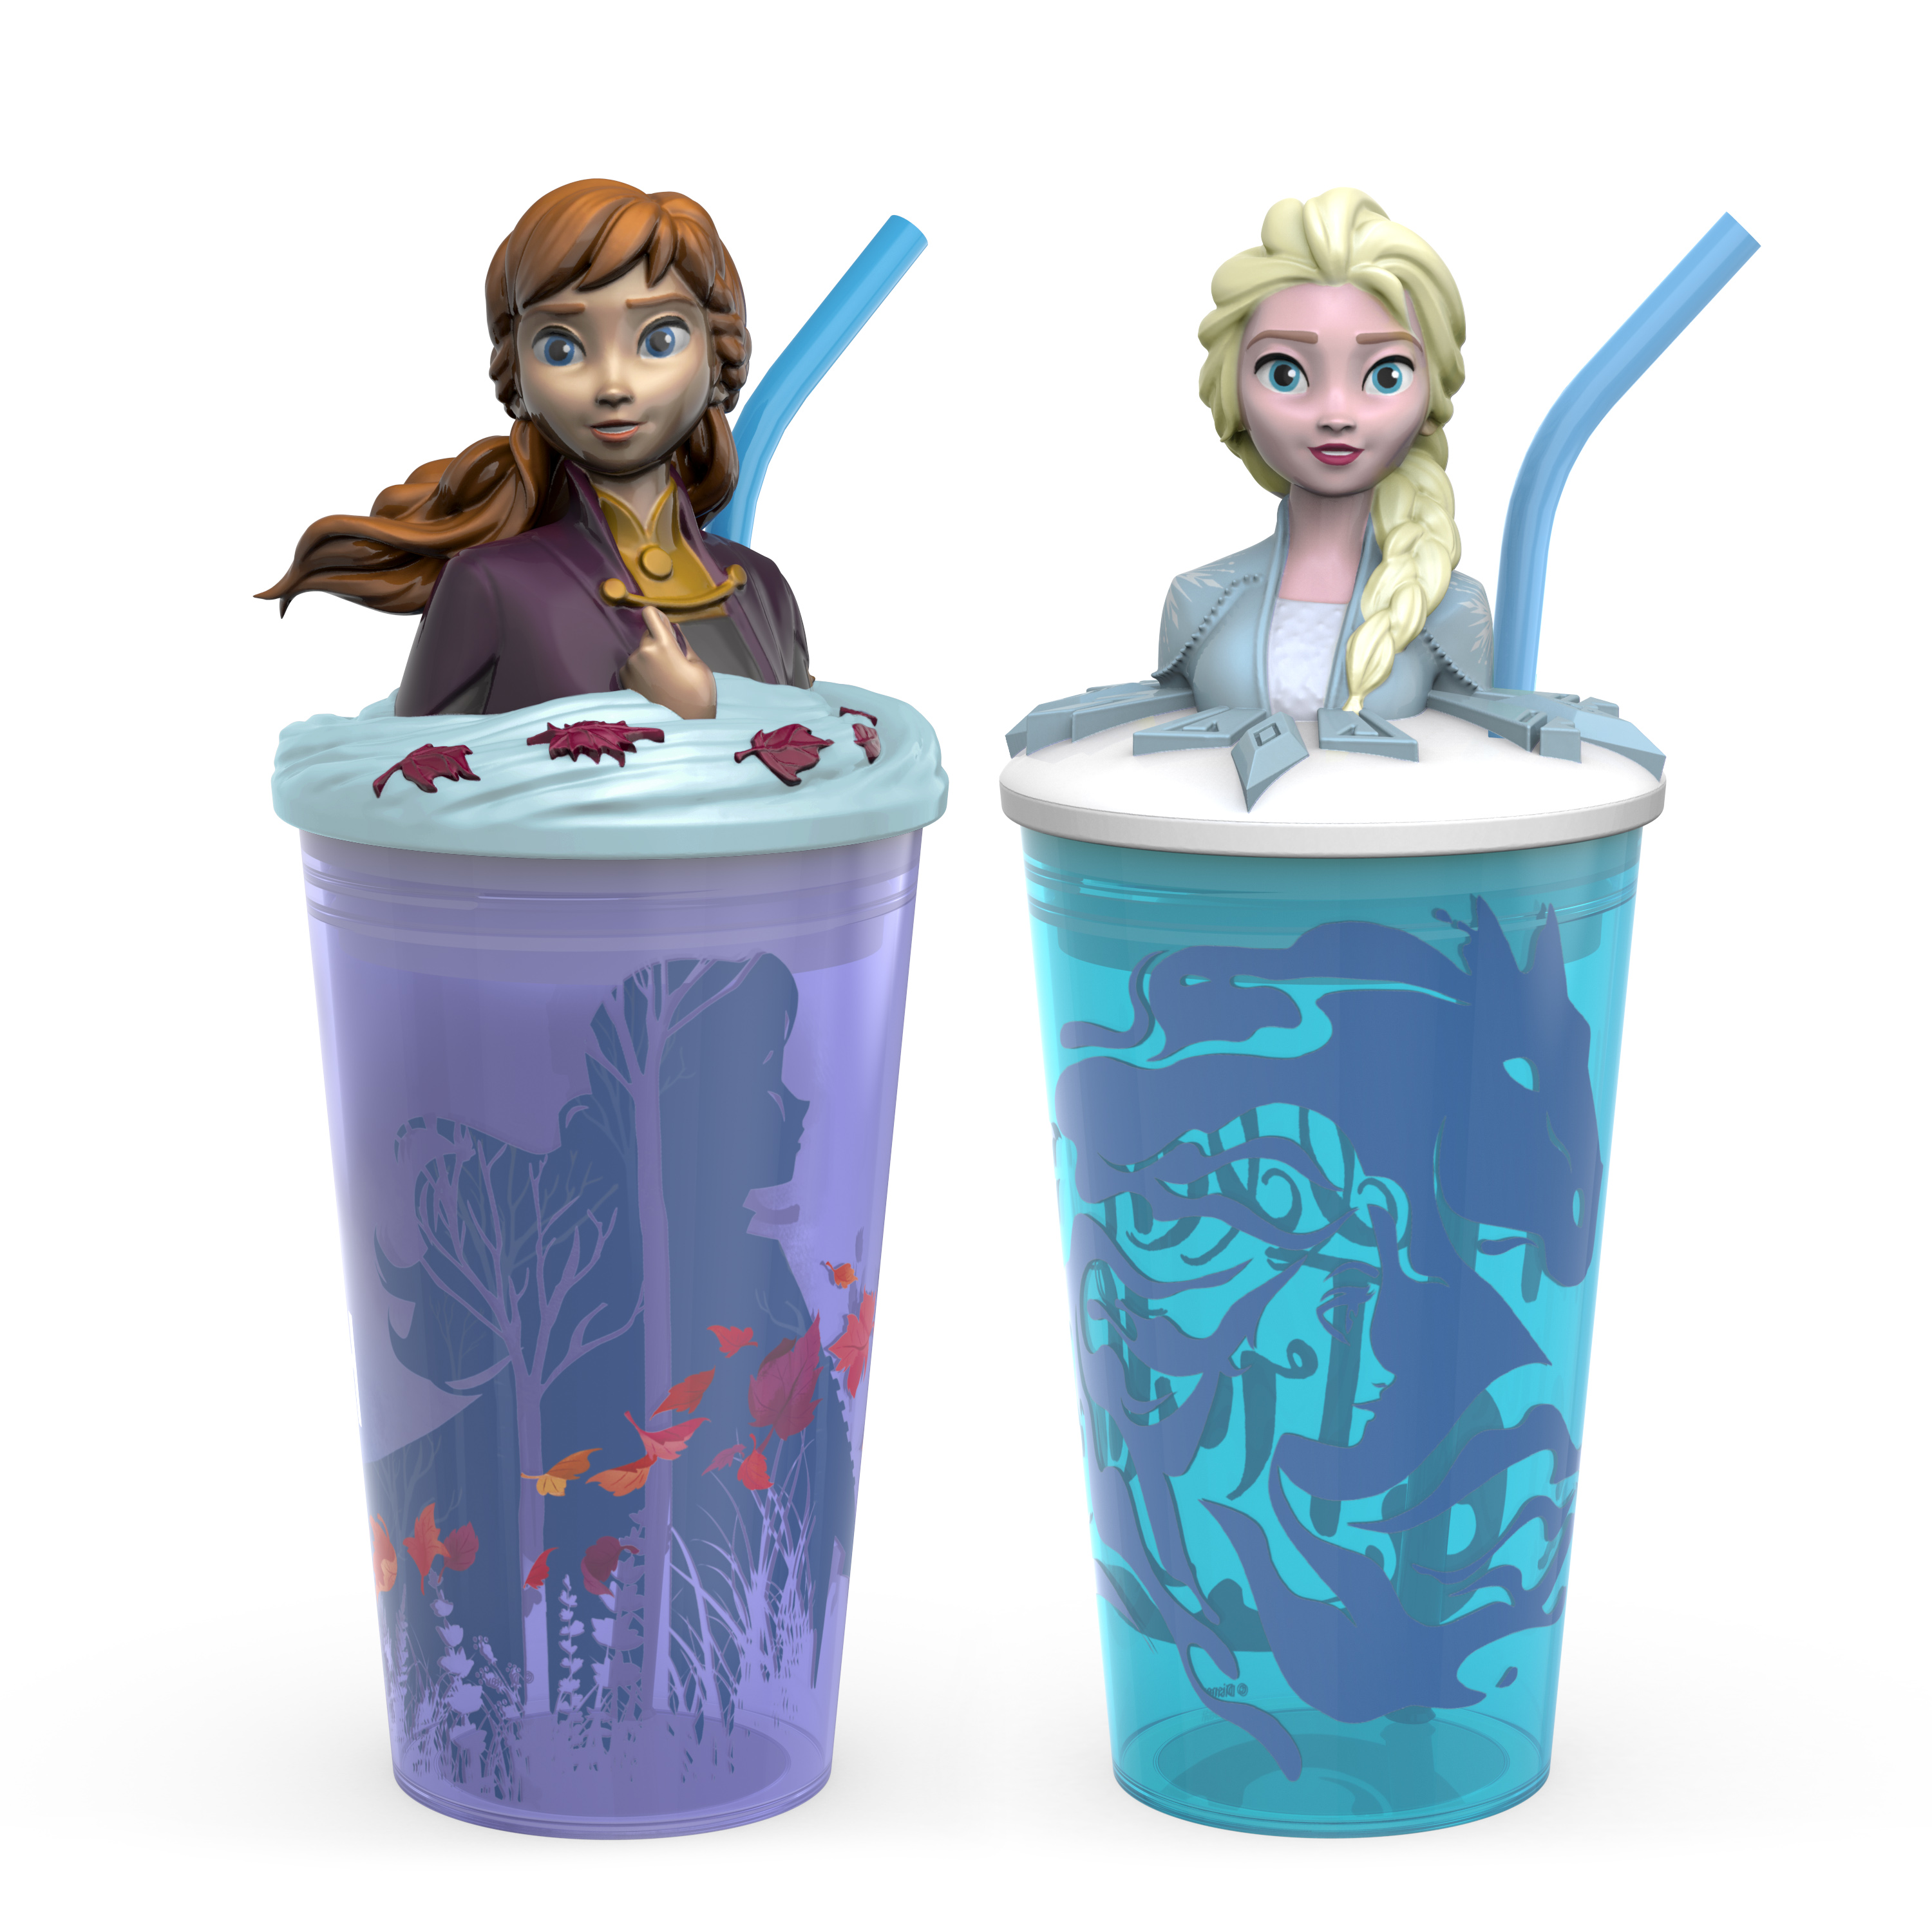 Disney Frozen 2 Movie 15 ounce Kid’s Tumbler, Anna and Elsa, 2-piece set slideshow image 1